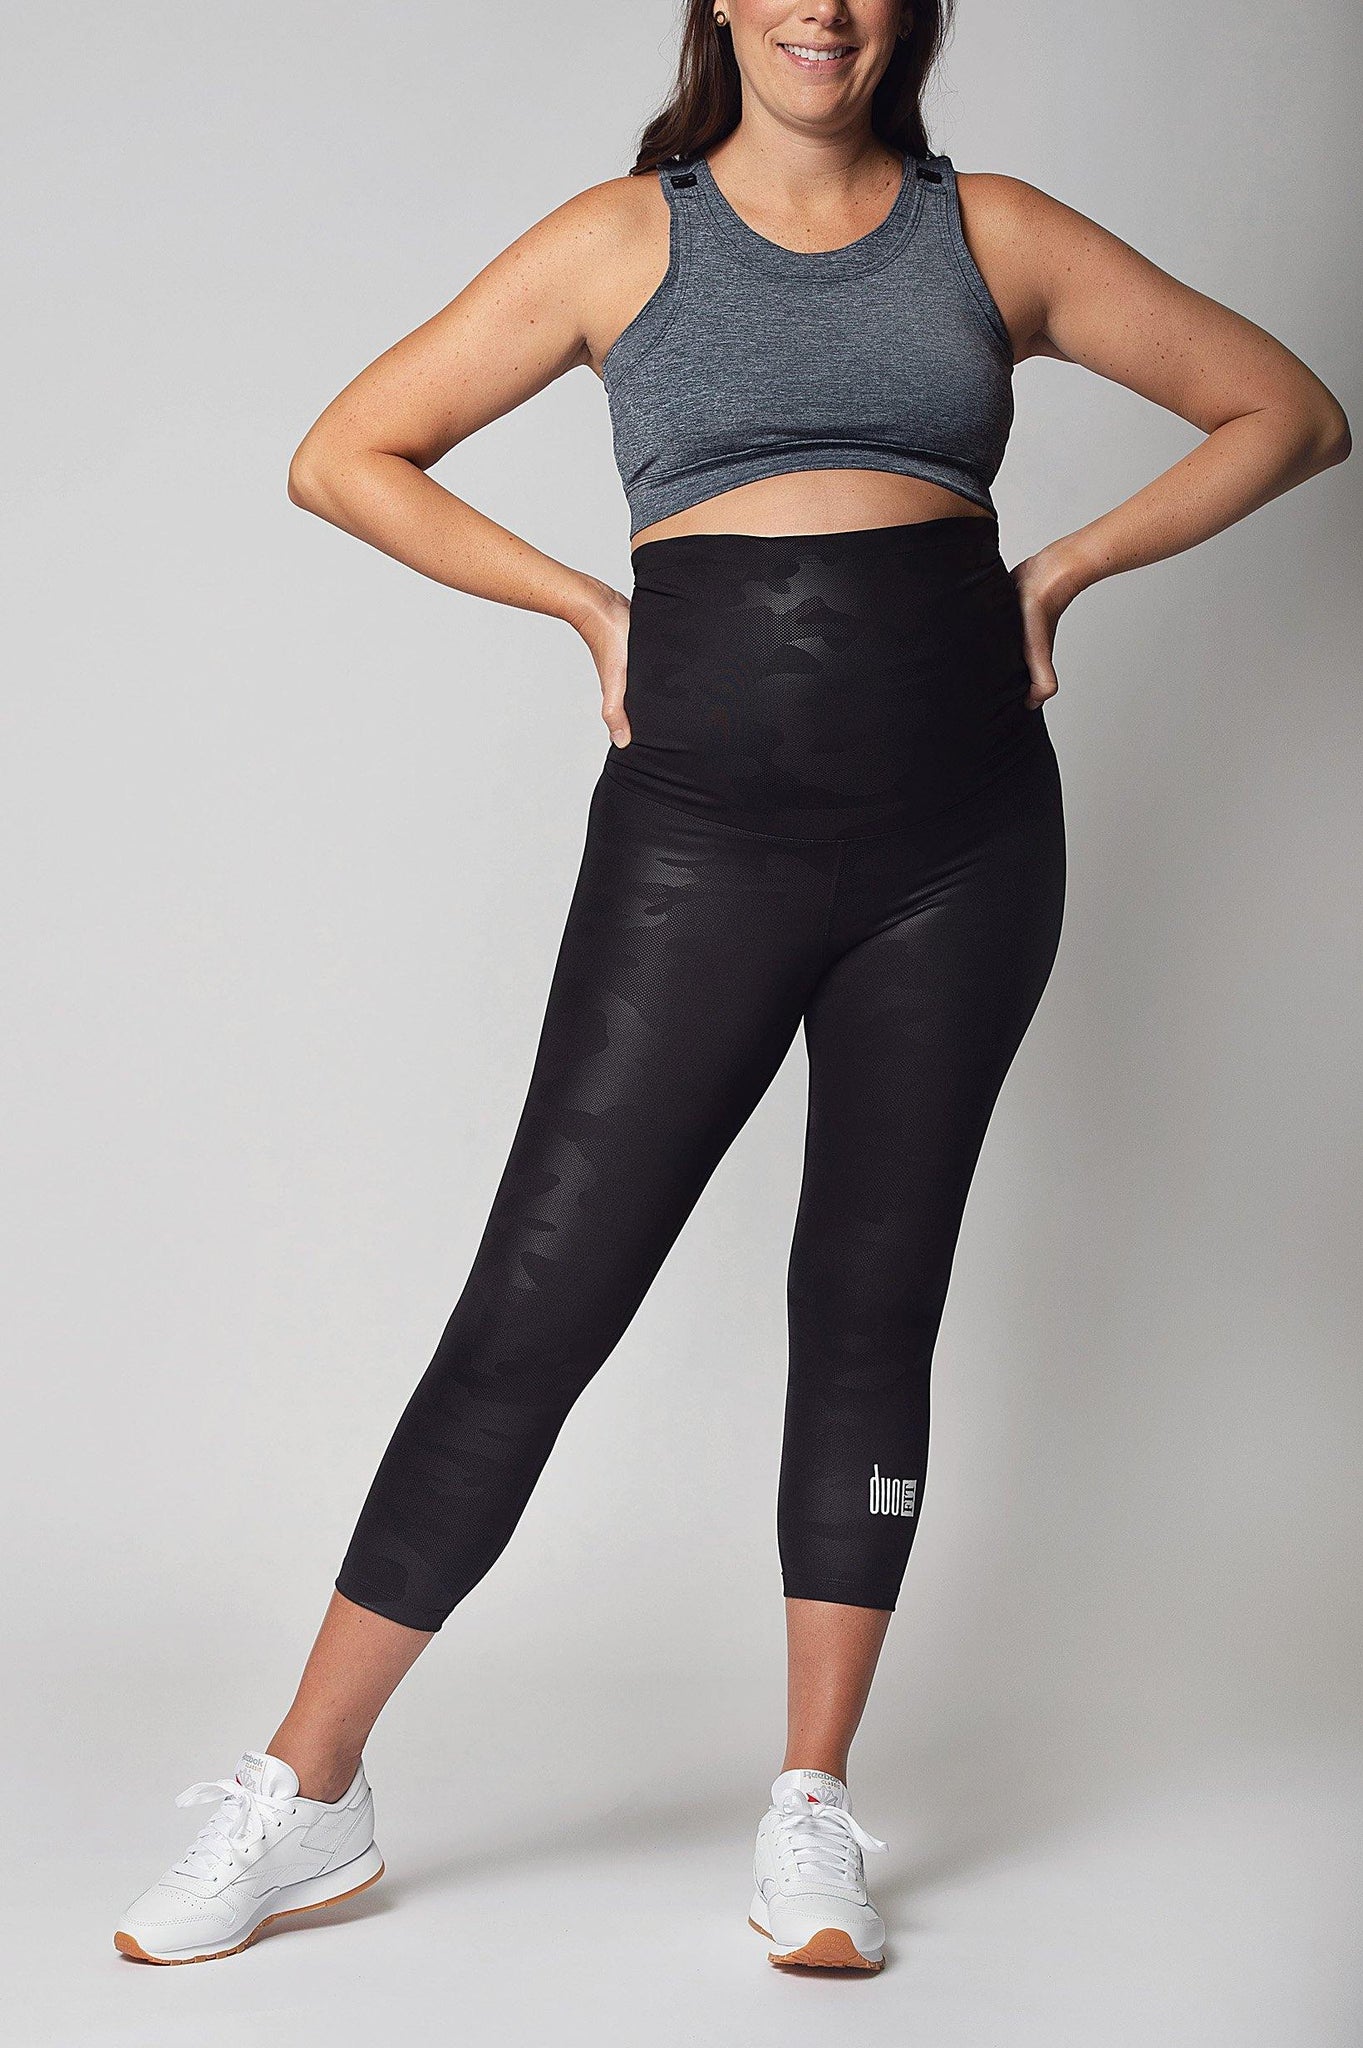 Dark Camo Plus Size Leggings, Gym, Fitness & Yoga Wear